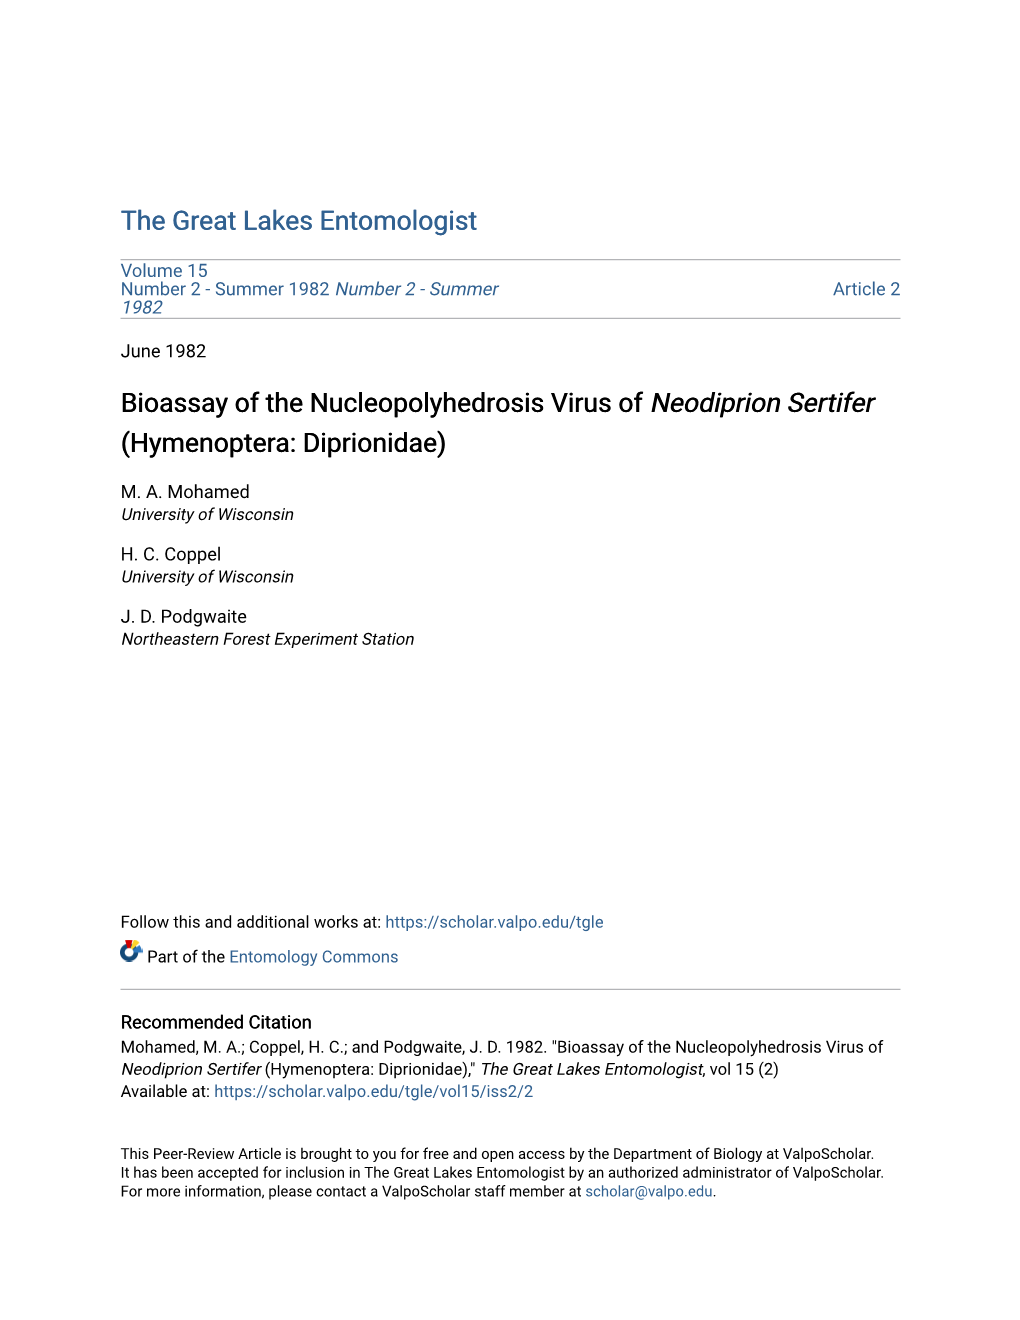 Bioassay of the Nucleopolyhedrosis Virus of Neodiprion Sertifer (Hymenoptera: Diprionidae)